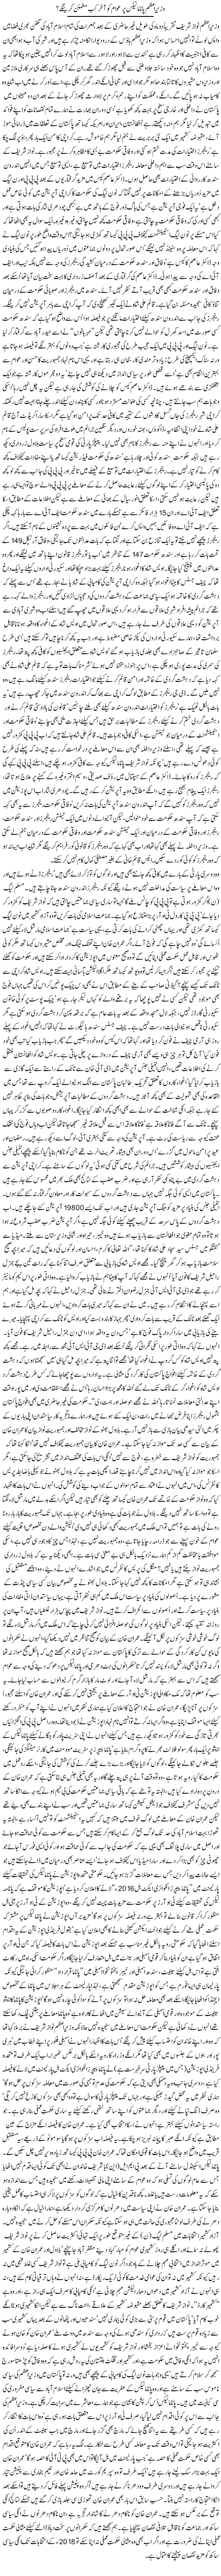 Wazeer e Azam Panama Leaks Par Awam Ko Akhir Kab Mutmaen Karen Ge? | Rehmat Ali Razi | Daily Urdu Columns